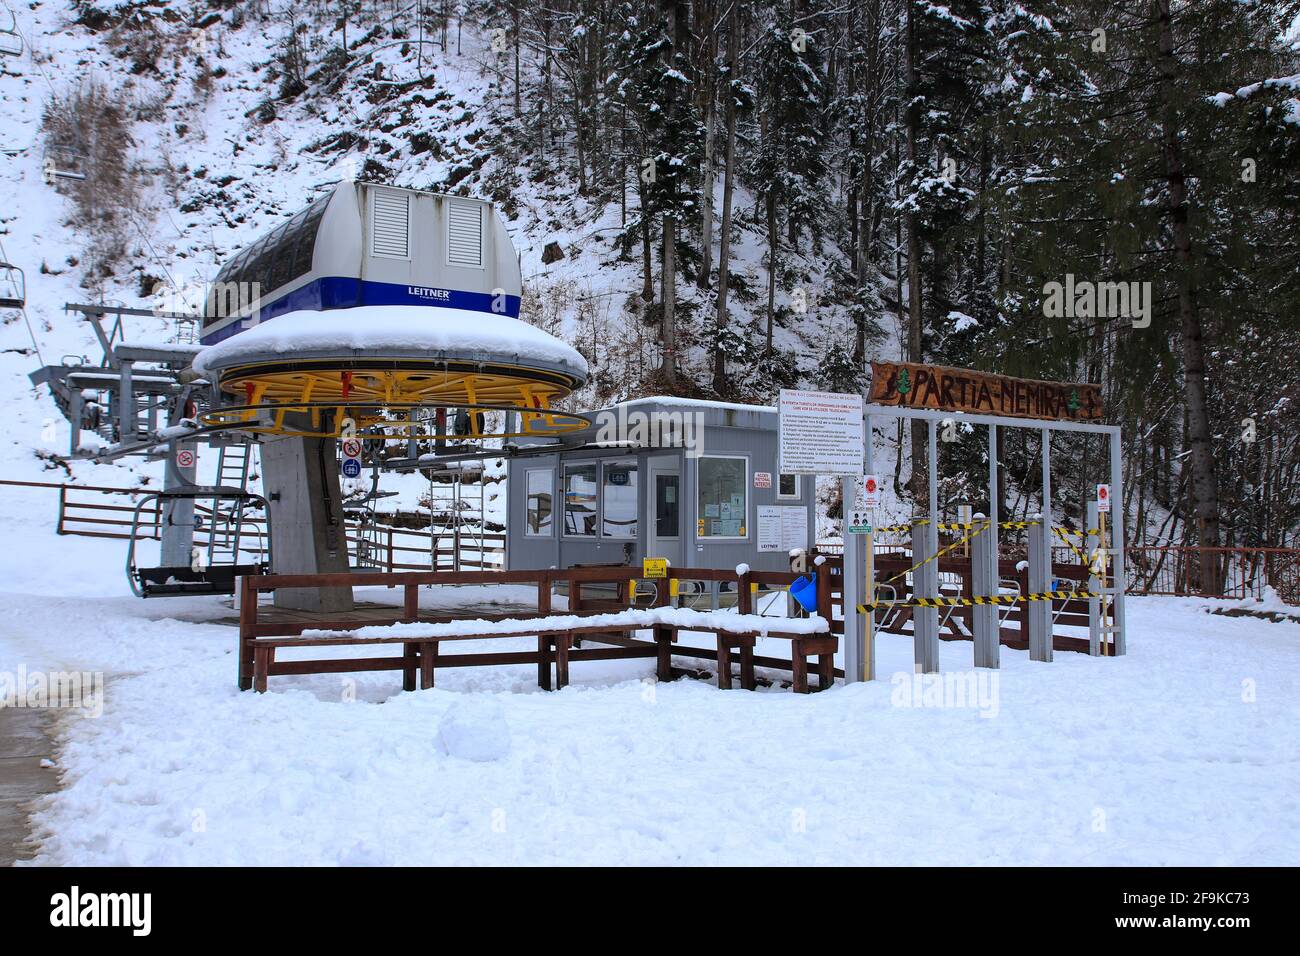 Slanic Moldova, Bacau, Romania - March 20, 2021: Ski slope Nemira closed during the COVID-19 pandemic Stock Photo